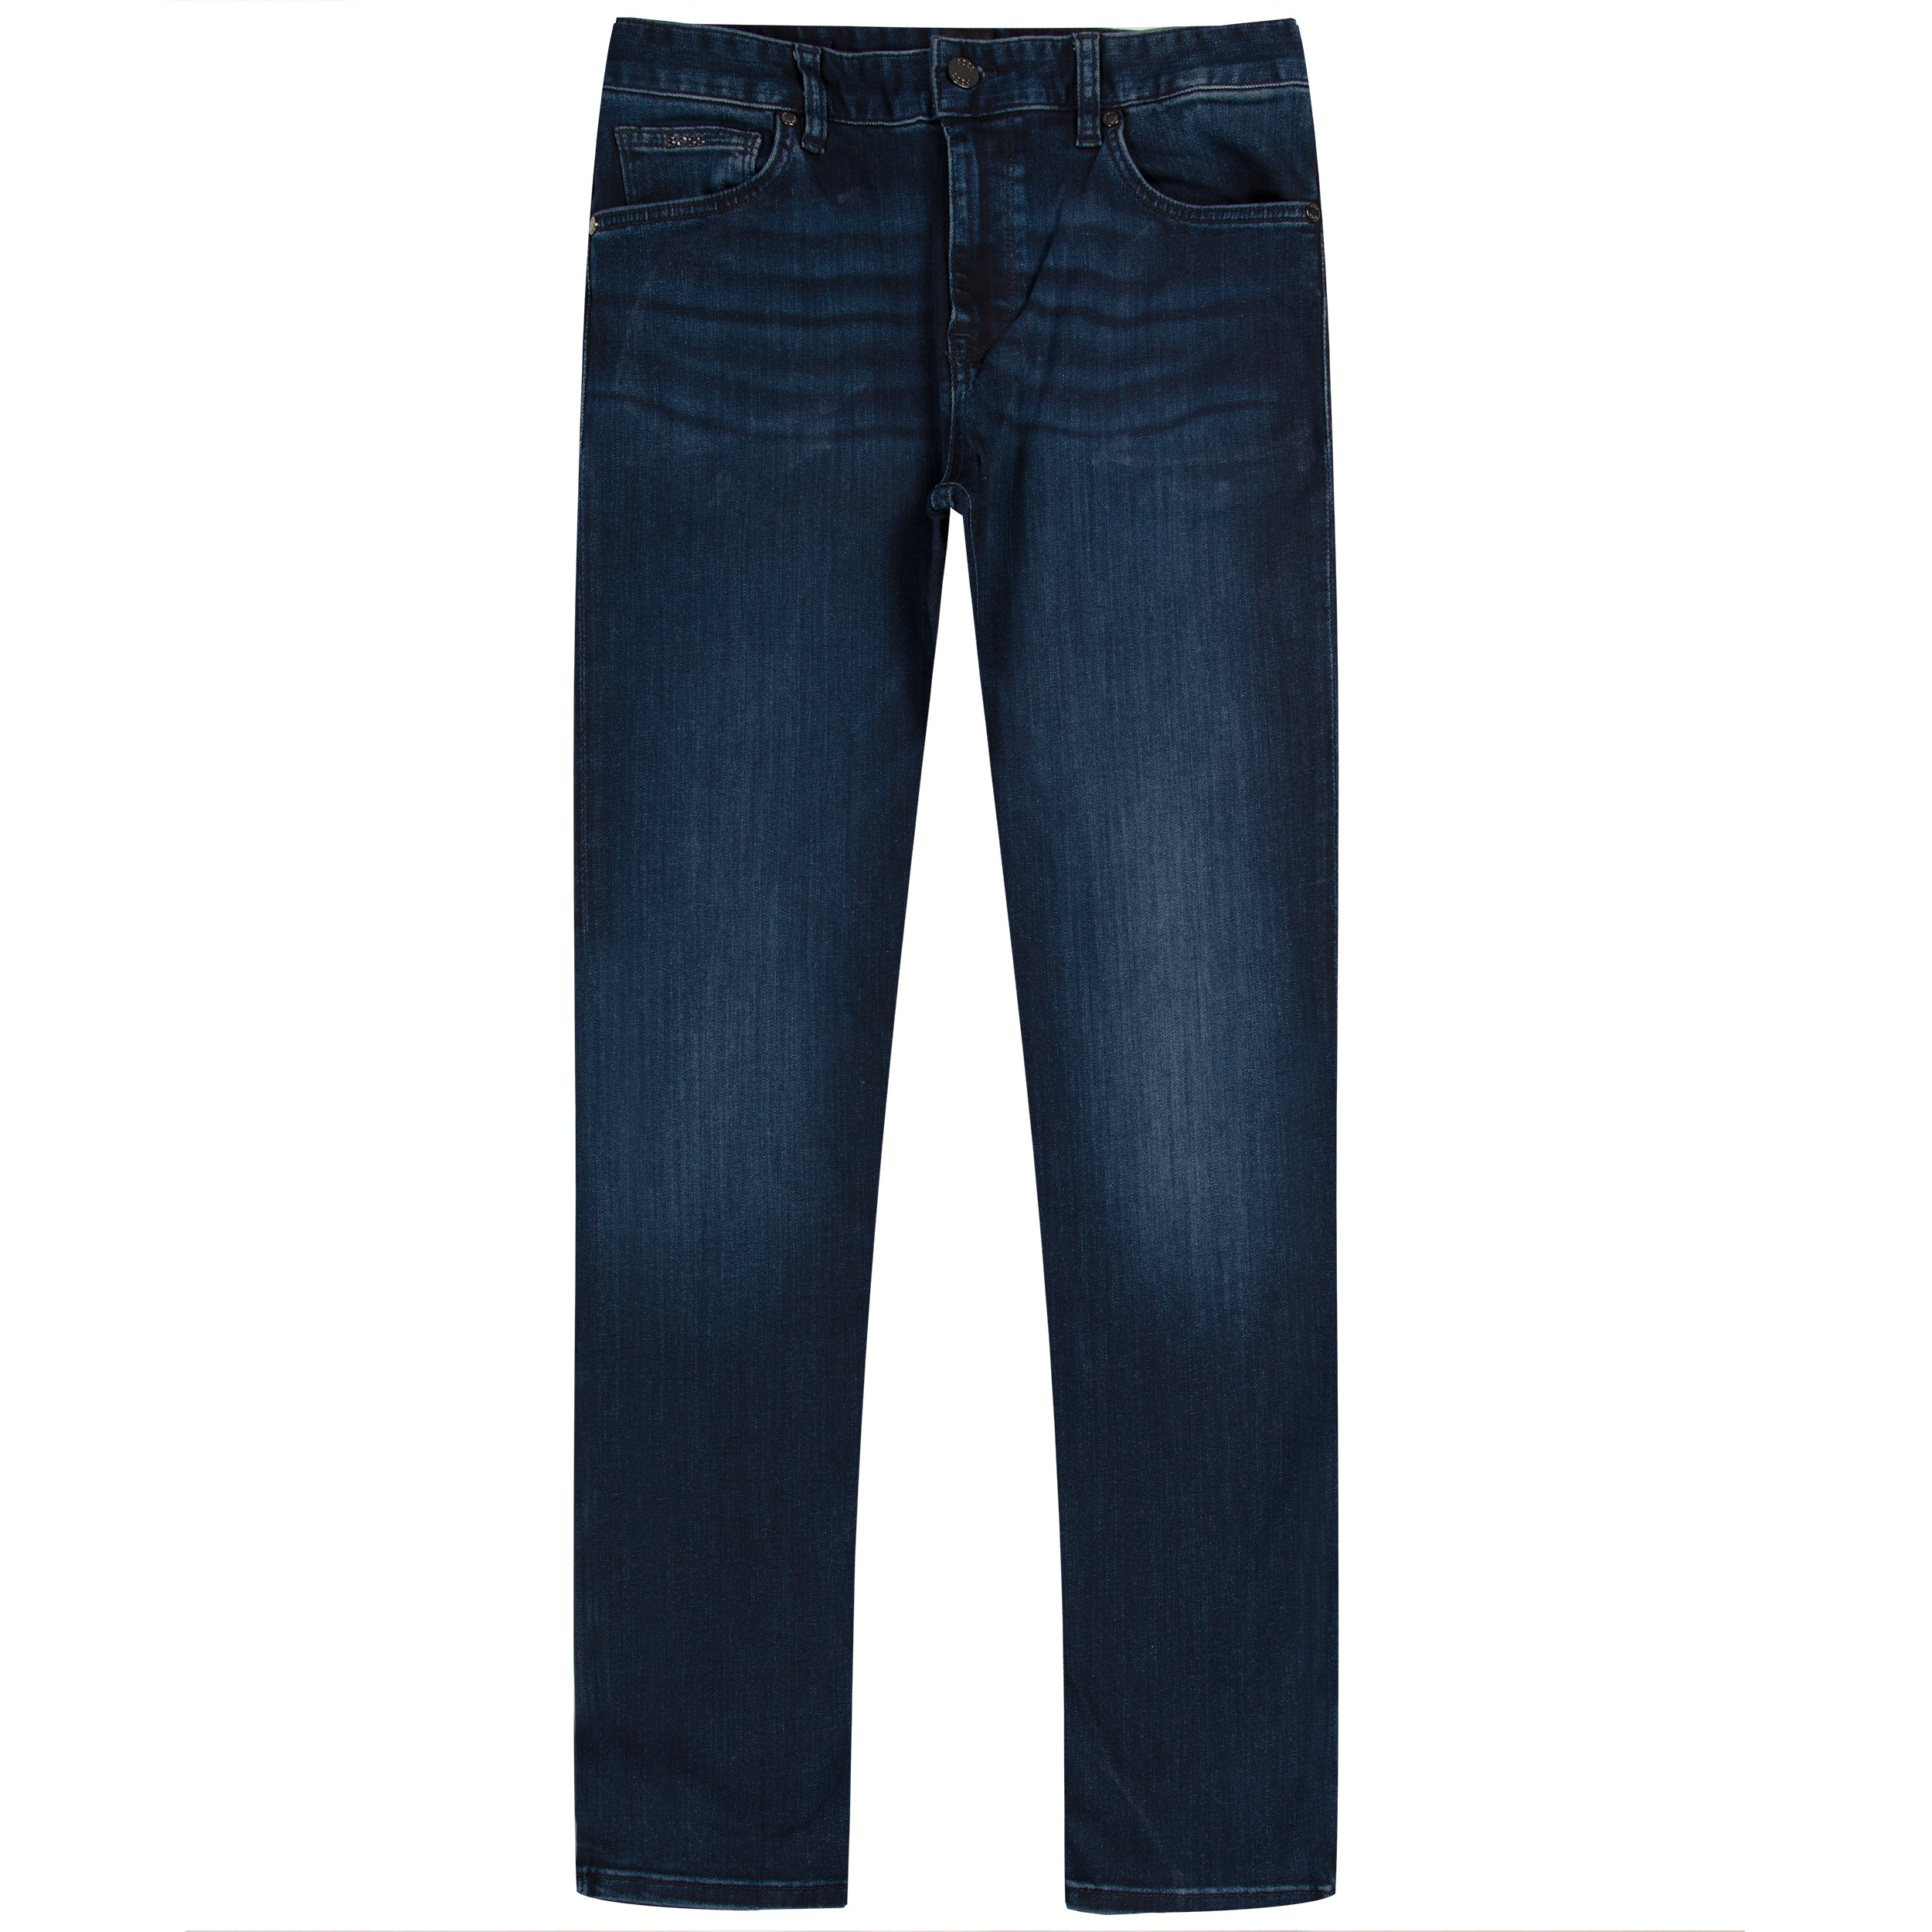 HUGO BOSS Maine3 Regular Fit Jeans Navy